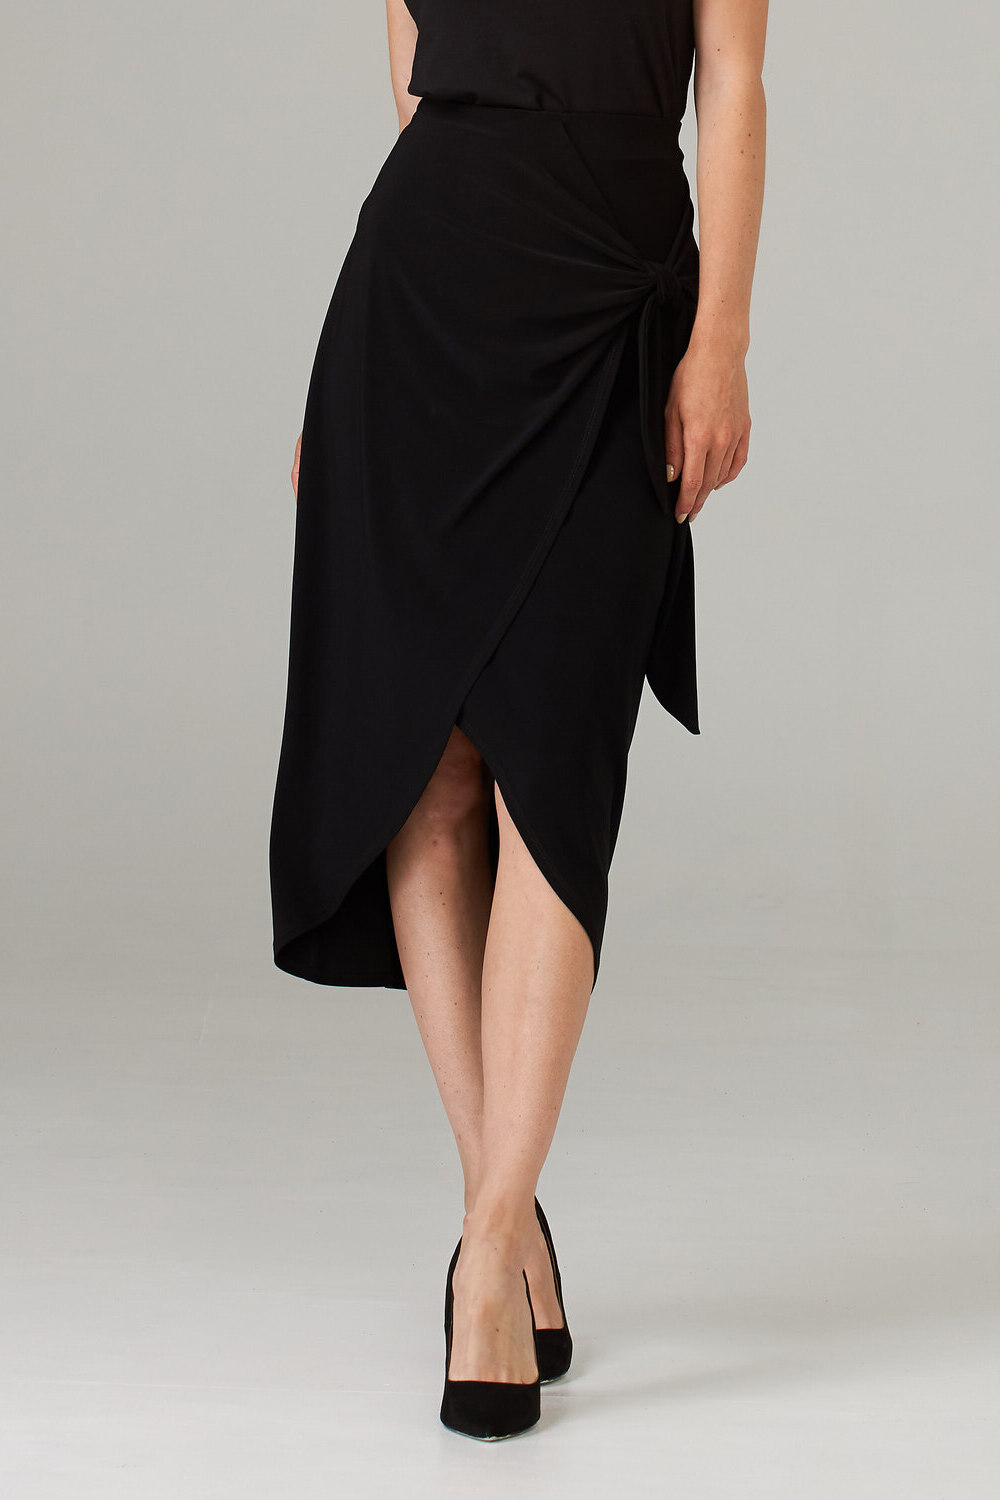 Joseph Ribkoff Skirt Style 203176. Black